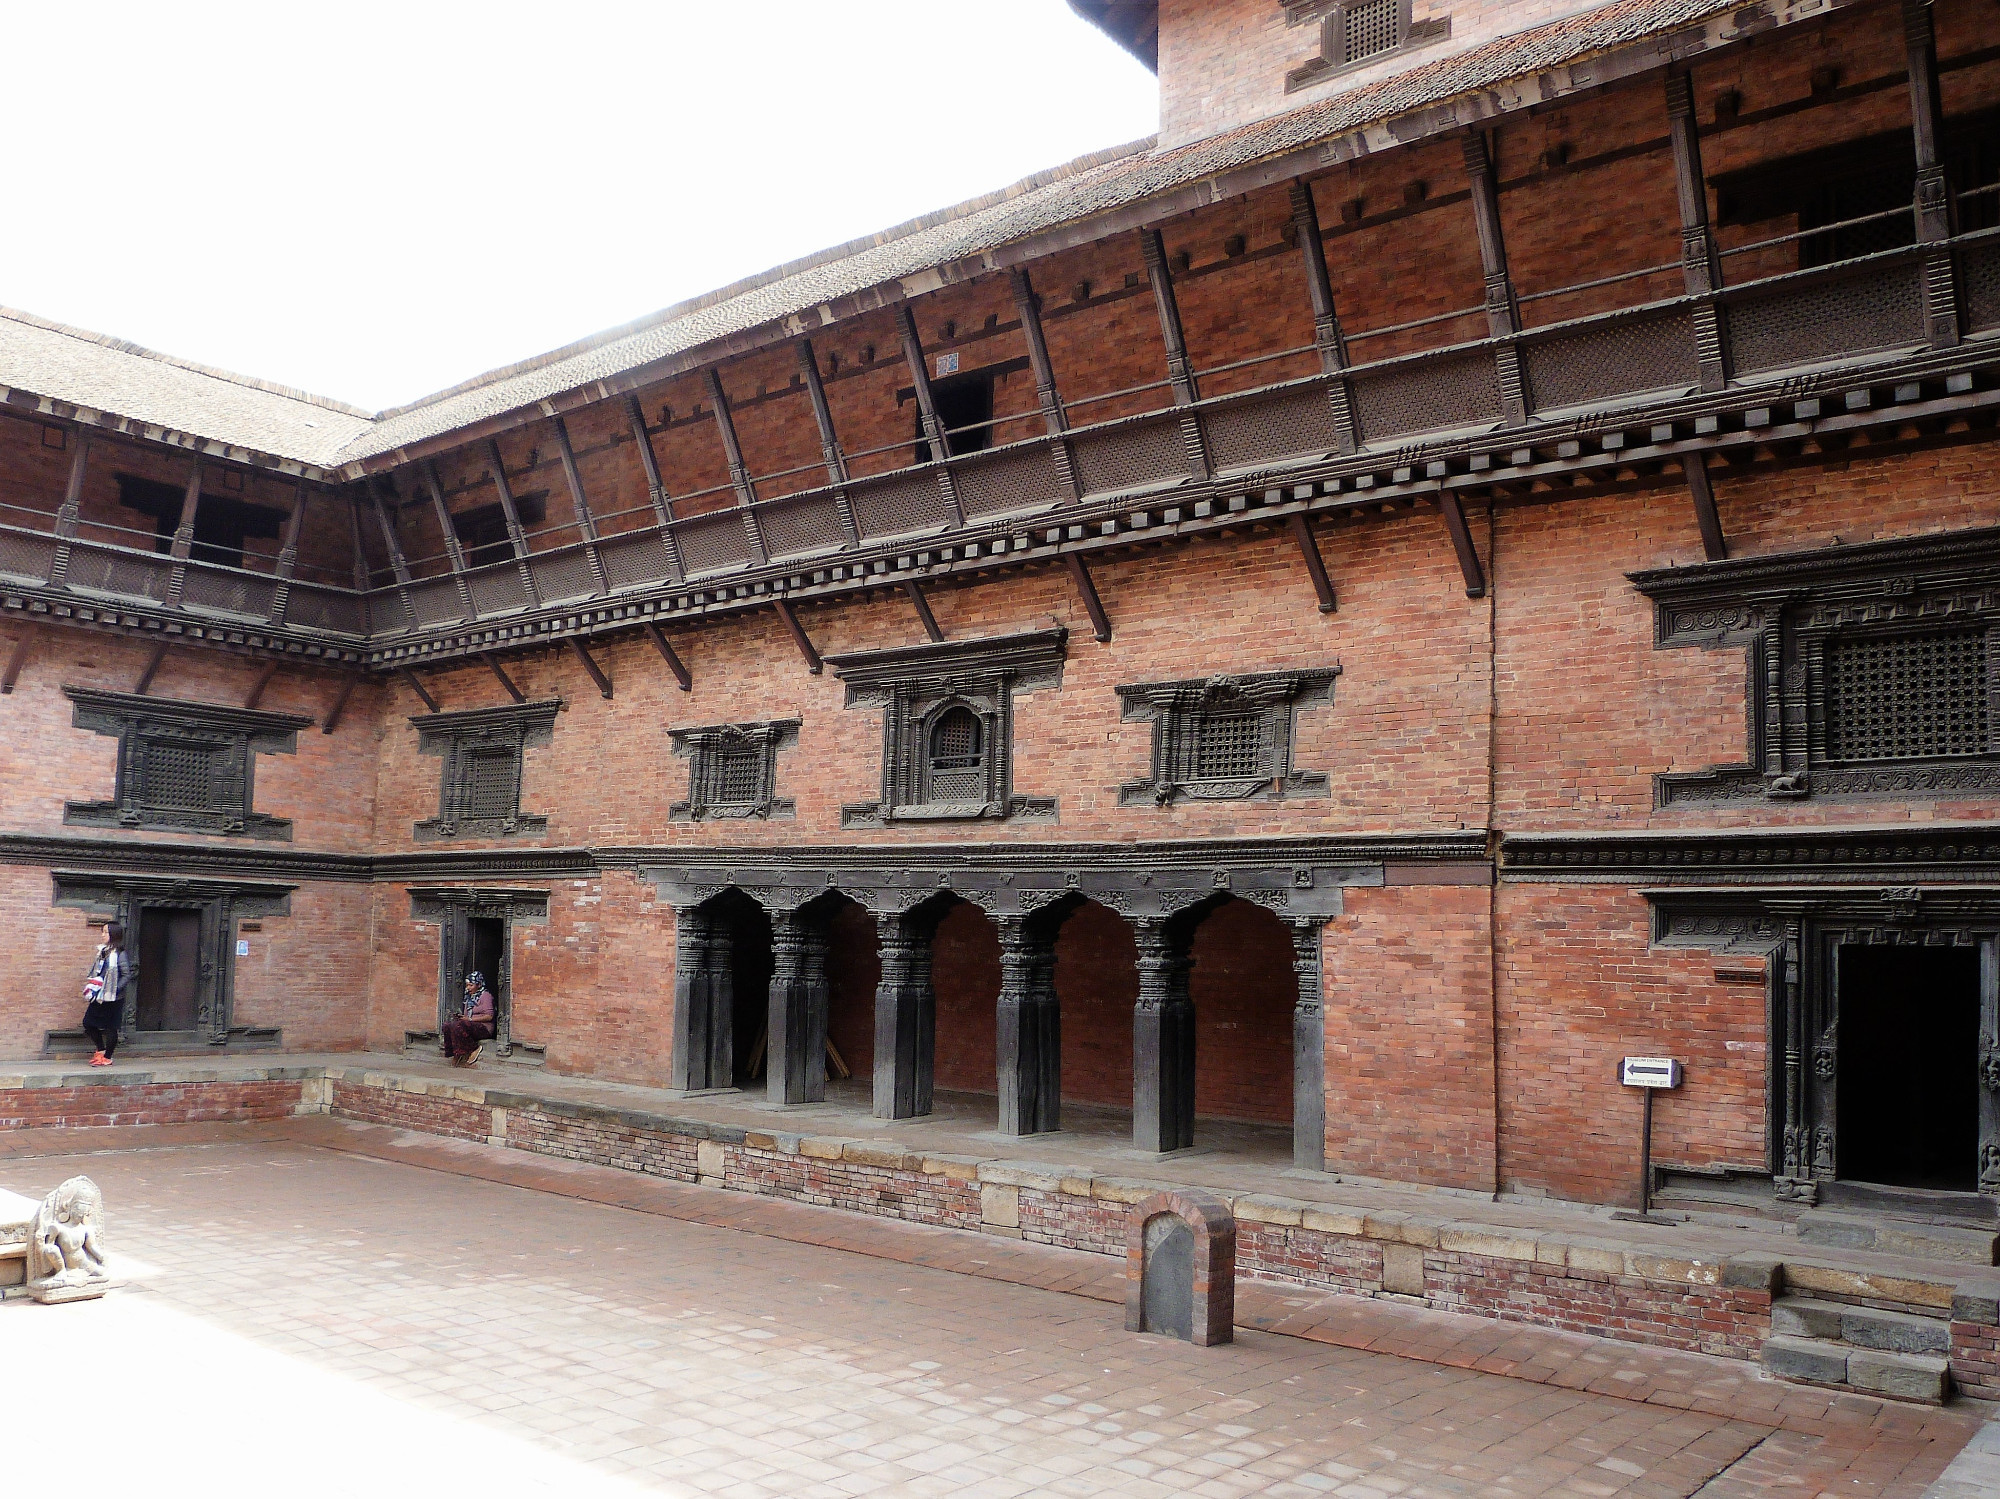 Patan Durbar Square, Непал